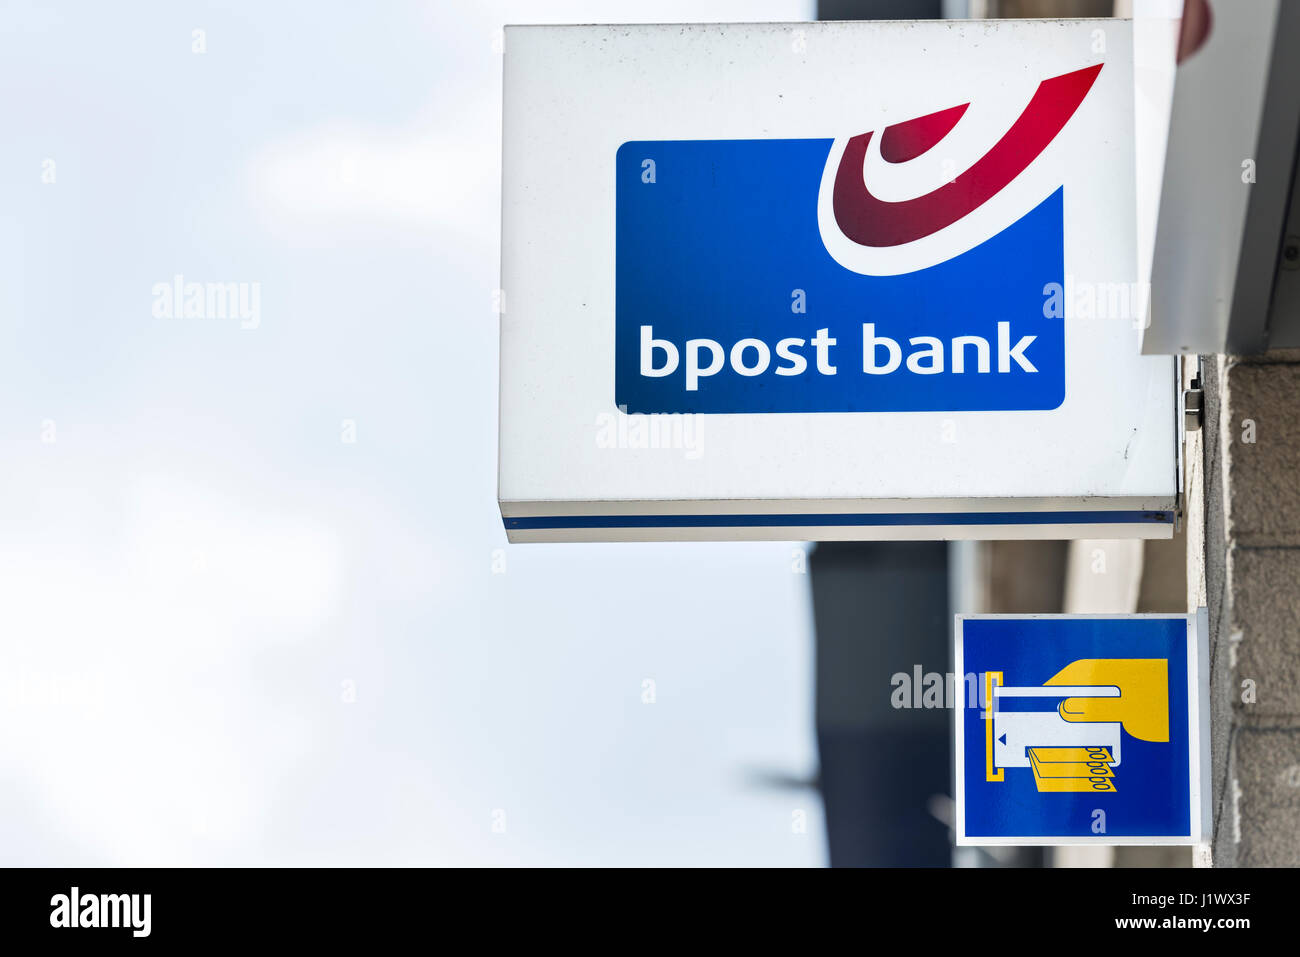 bpost banking